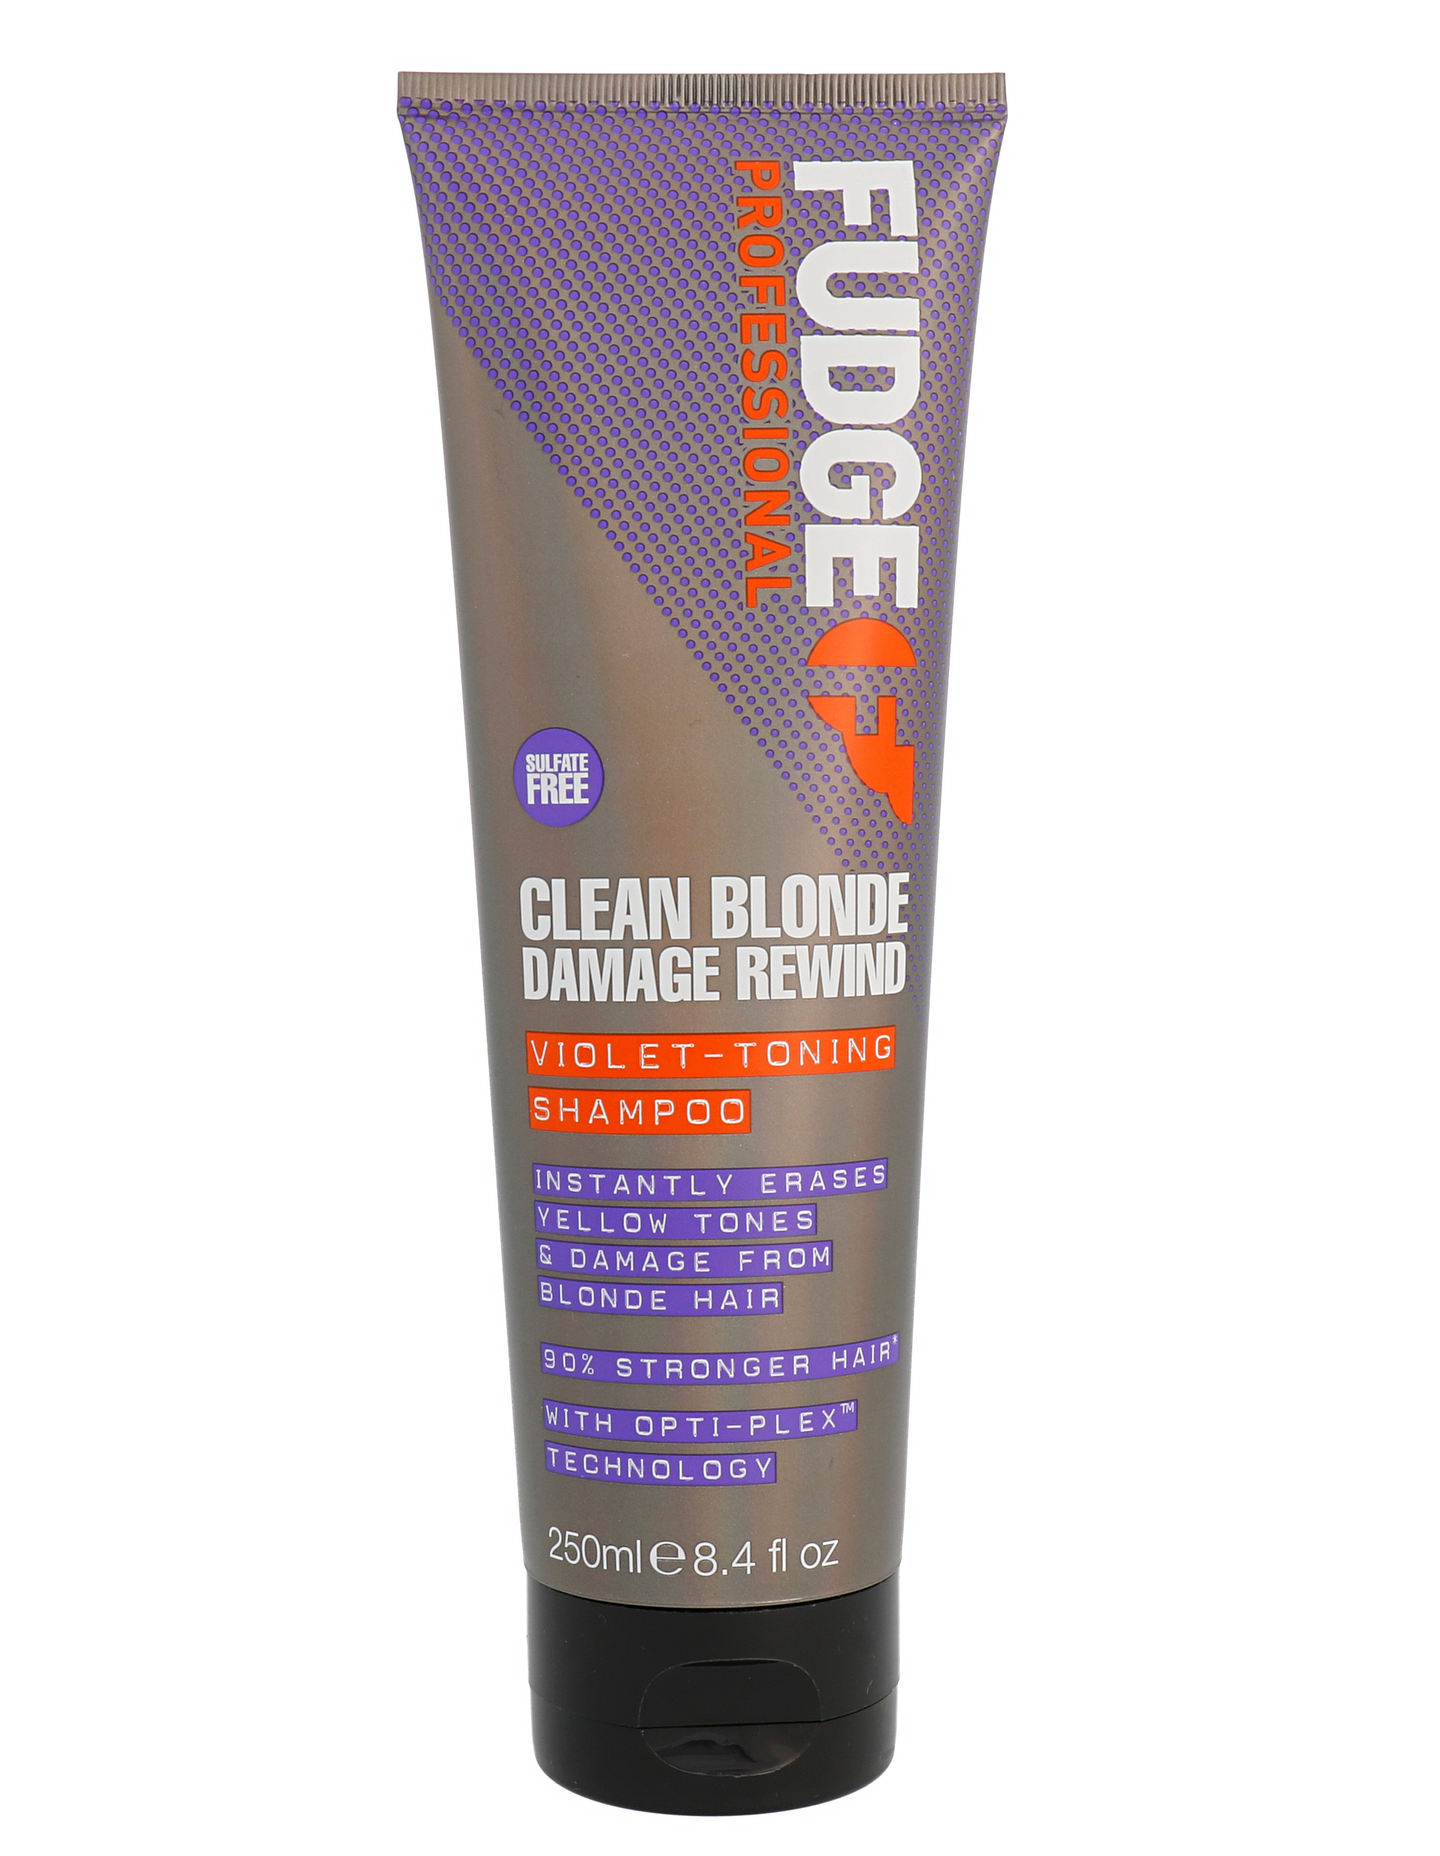 Fudge shampoo 250ml Clean Blonde Damage Rewind Violet-Toning